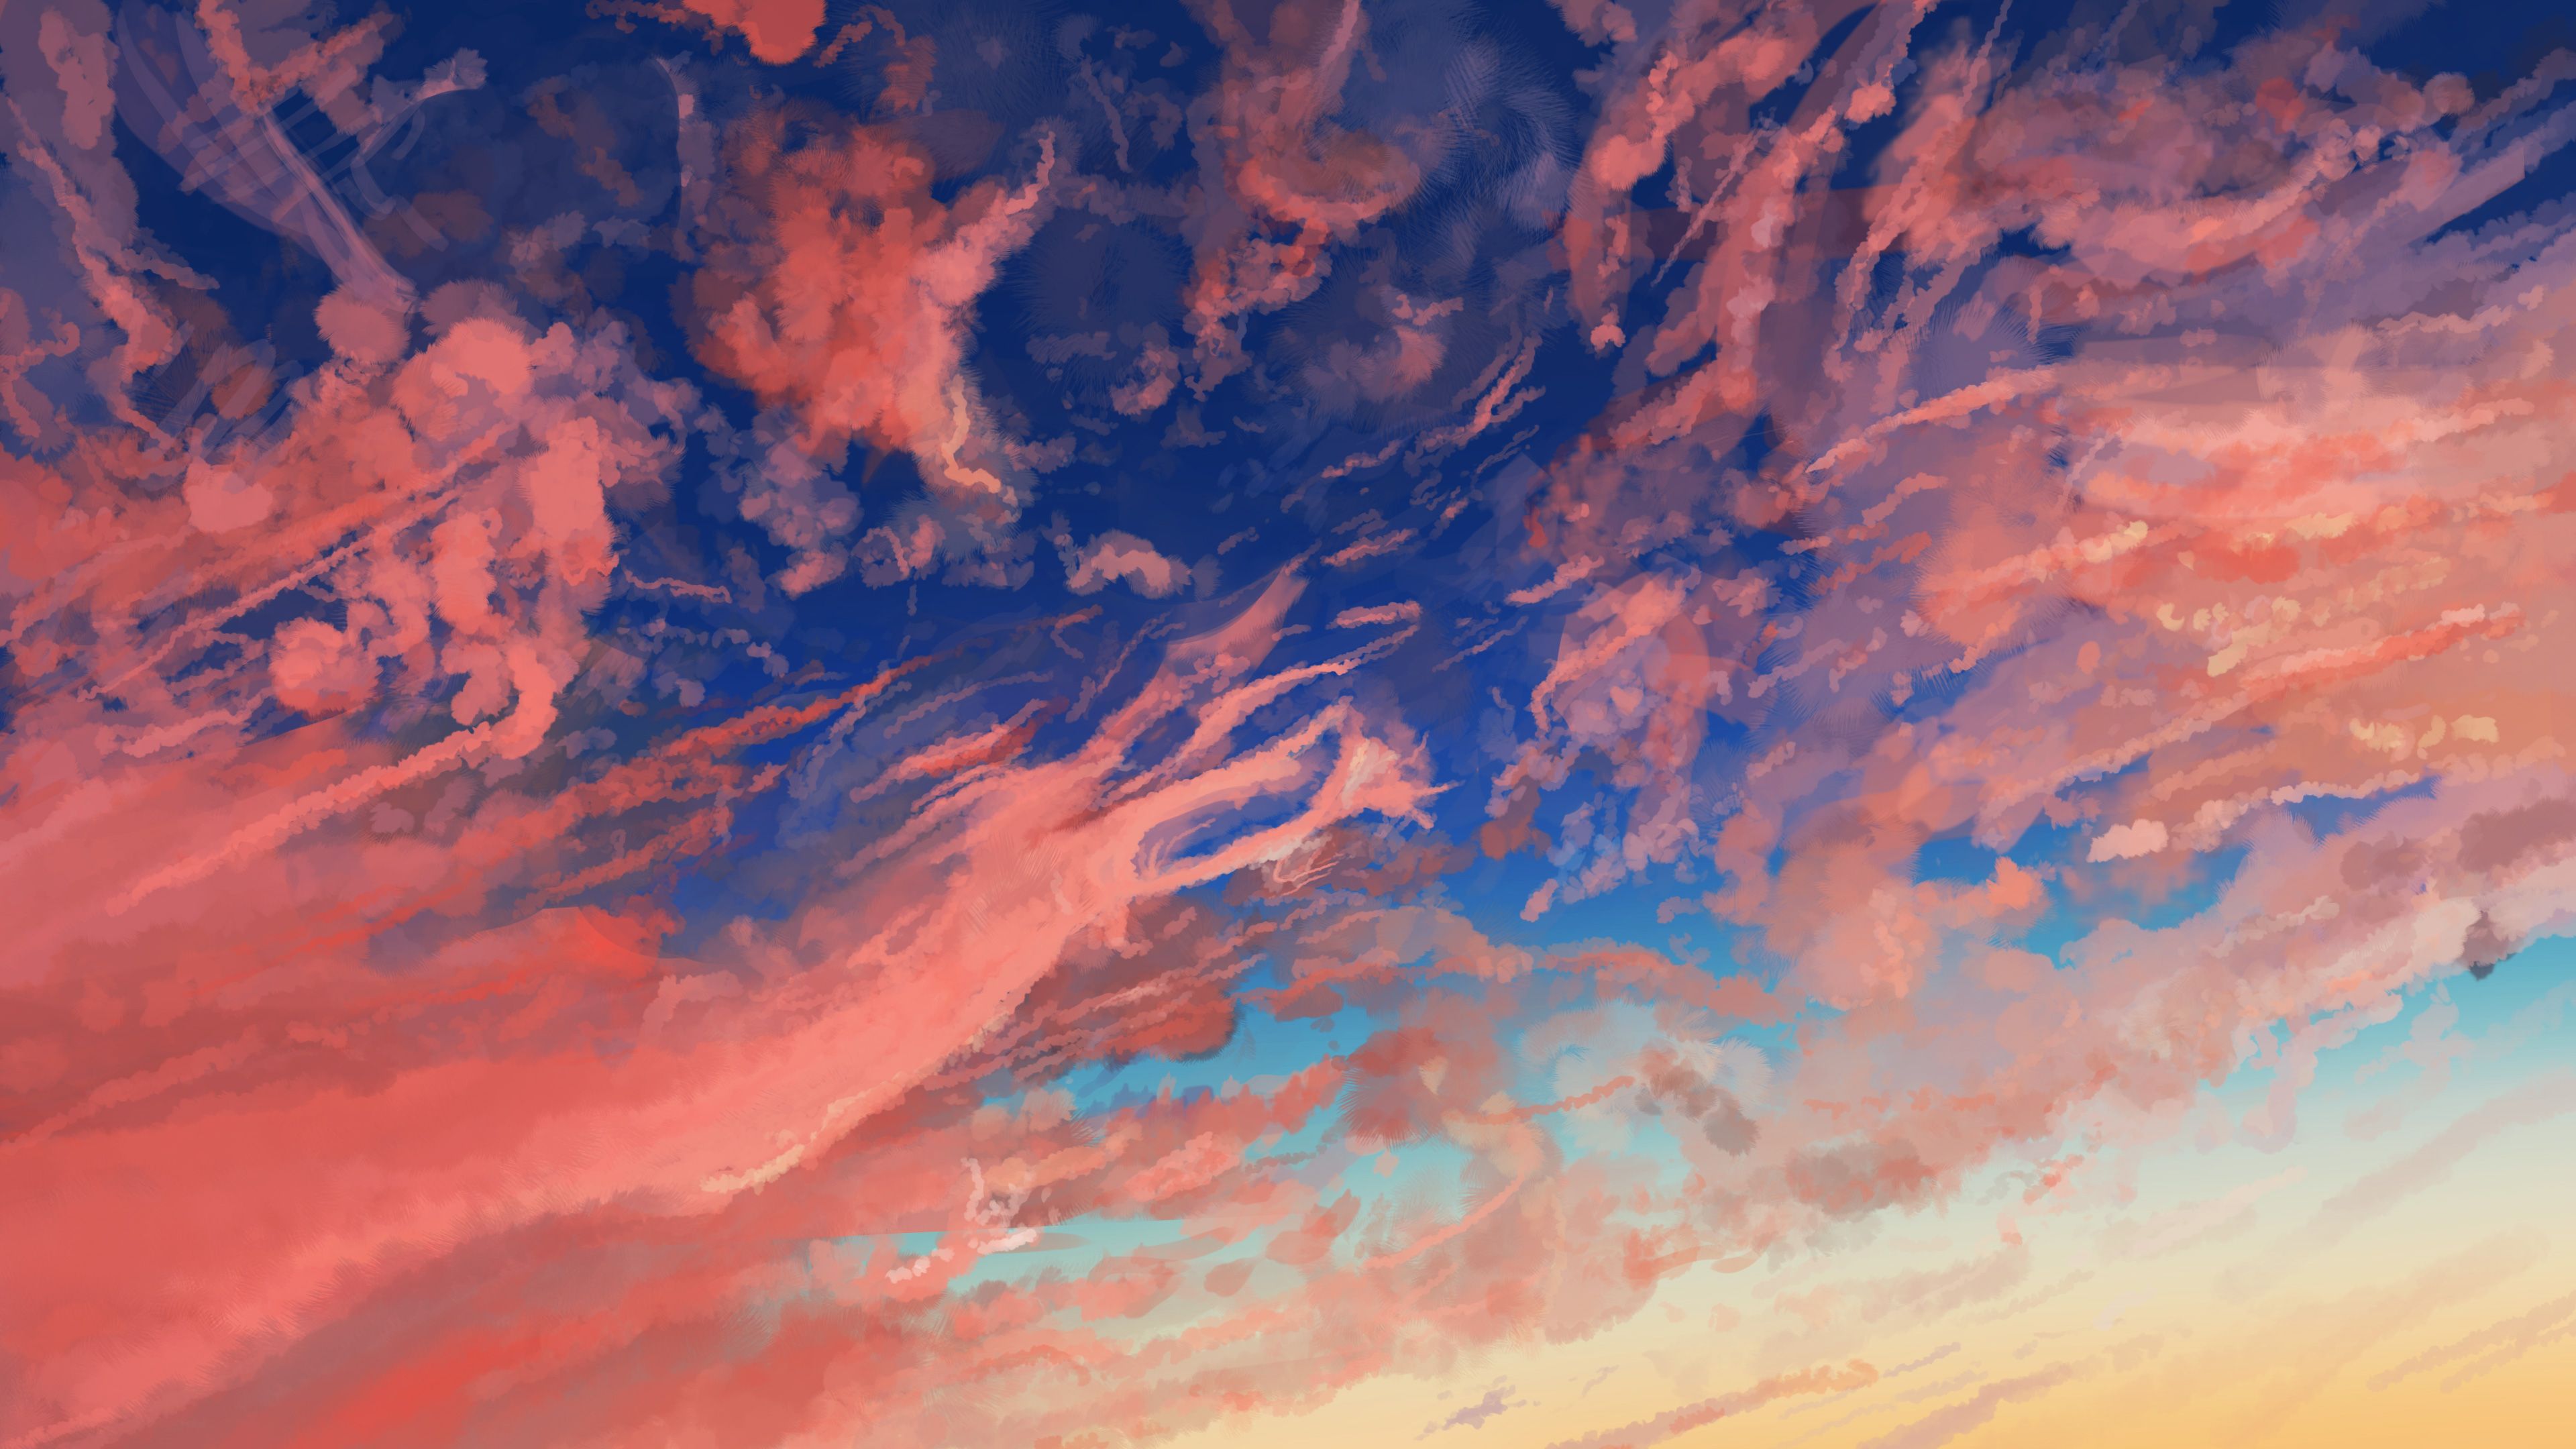 Cloud Sky Anime Sky Wallpaper, Hd Wallpaper, Digital Art Wallpaper, Cloud Wallpaper, Artwork Wallpaper, A. Blue Sky Wallpaper, Sky Anime, Night Sky Wallpaper